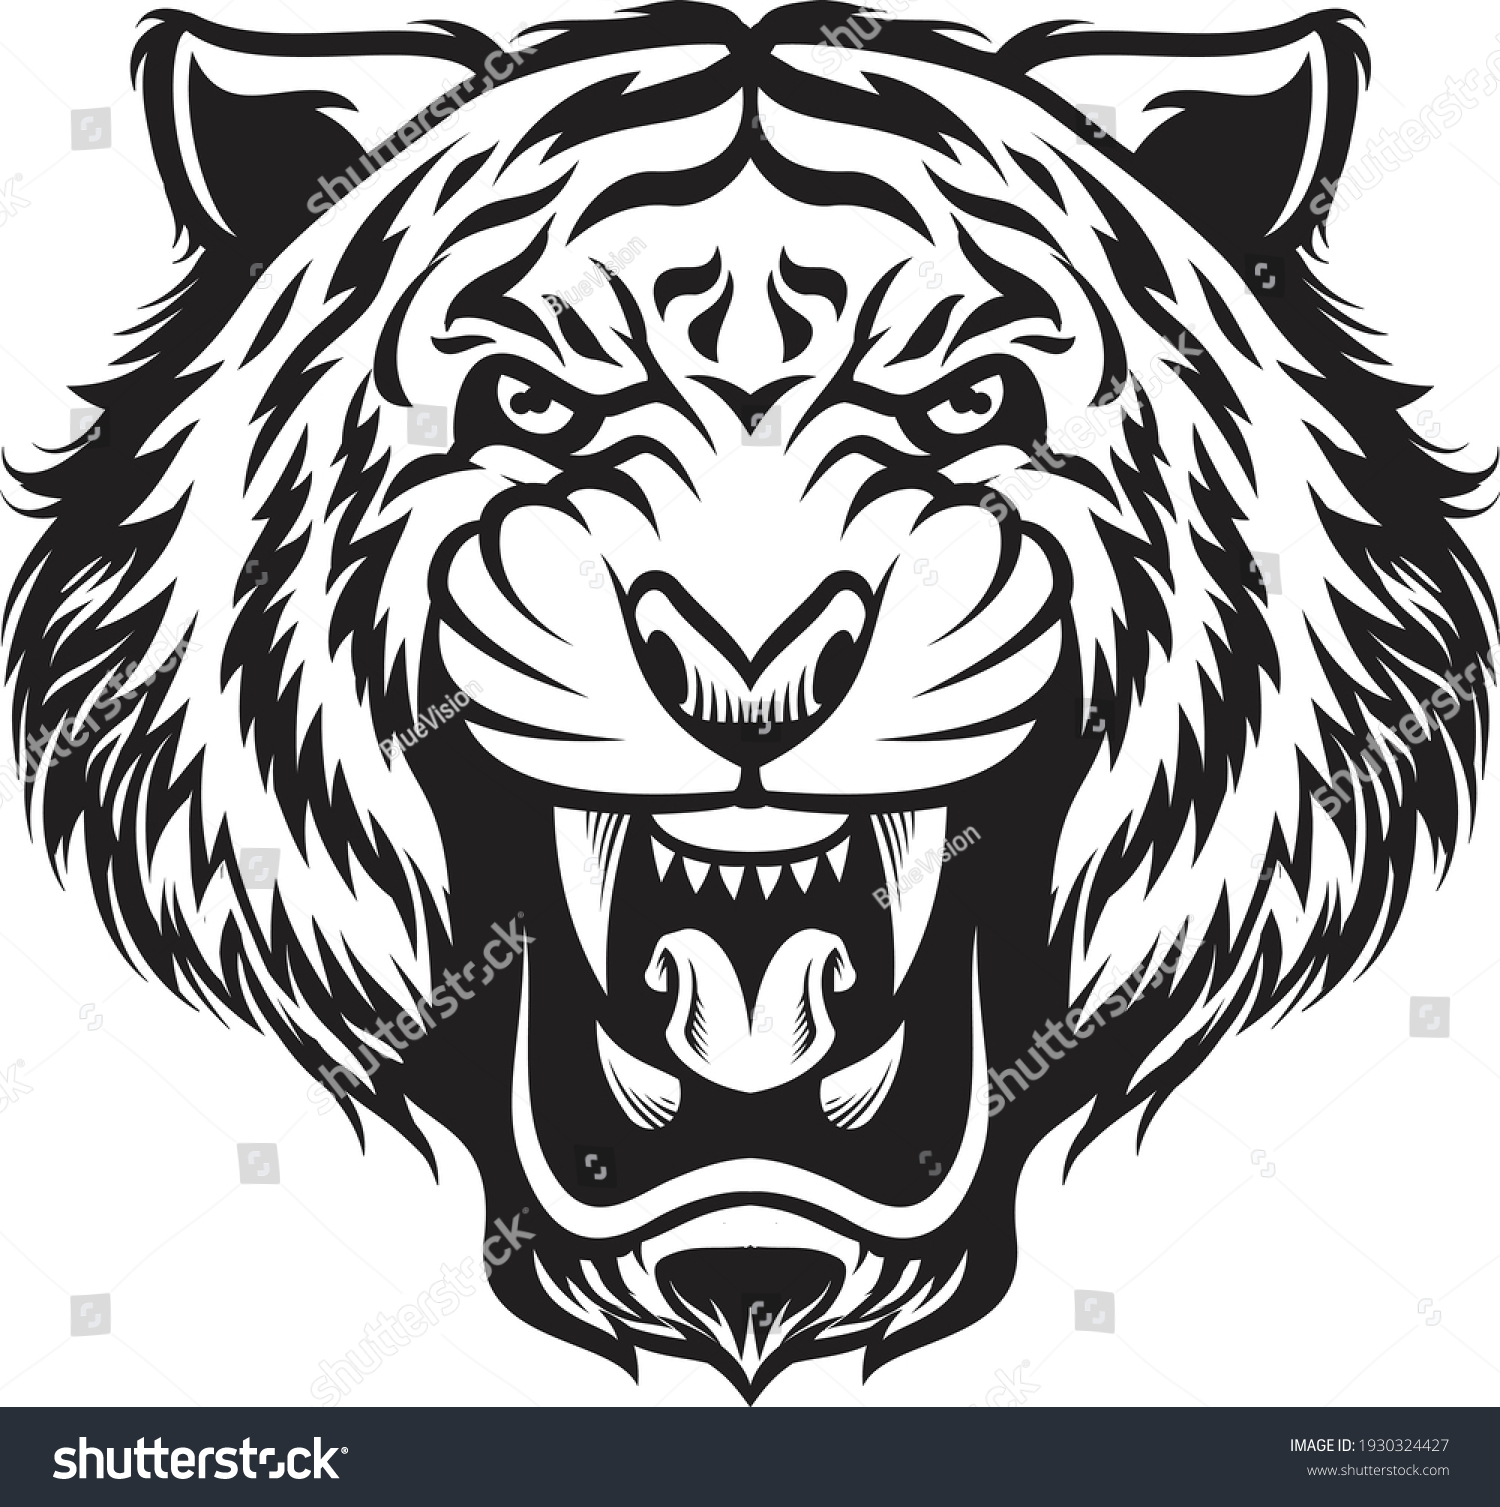 Illustration Tiger Roaring Head Black White Stock Vector Royalty Free 1930324427 Shutterstock 0346